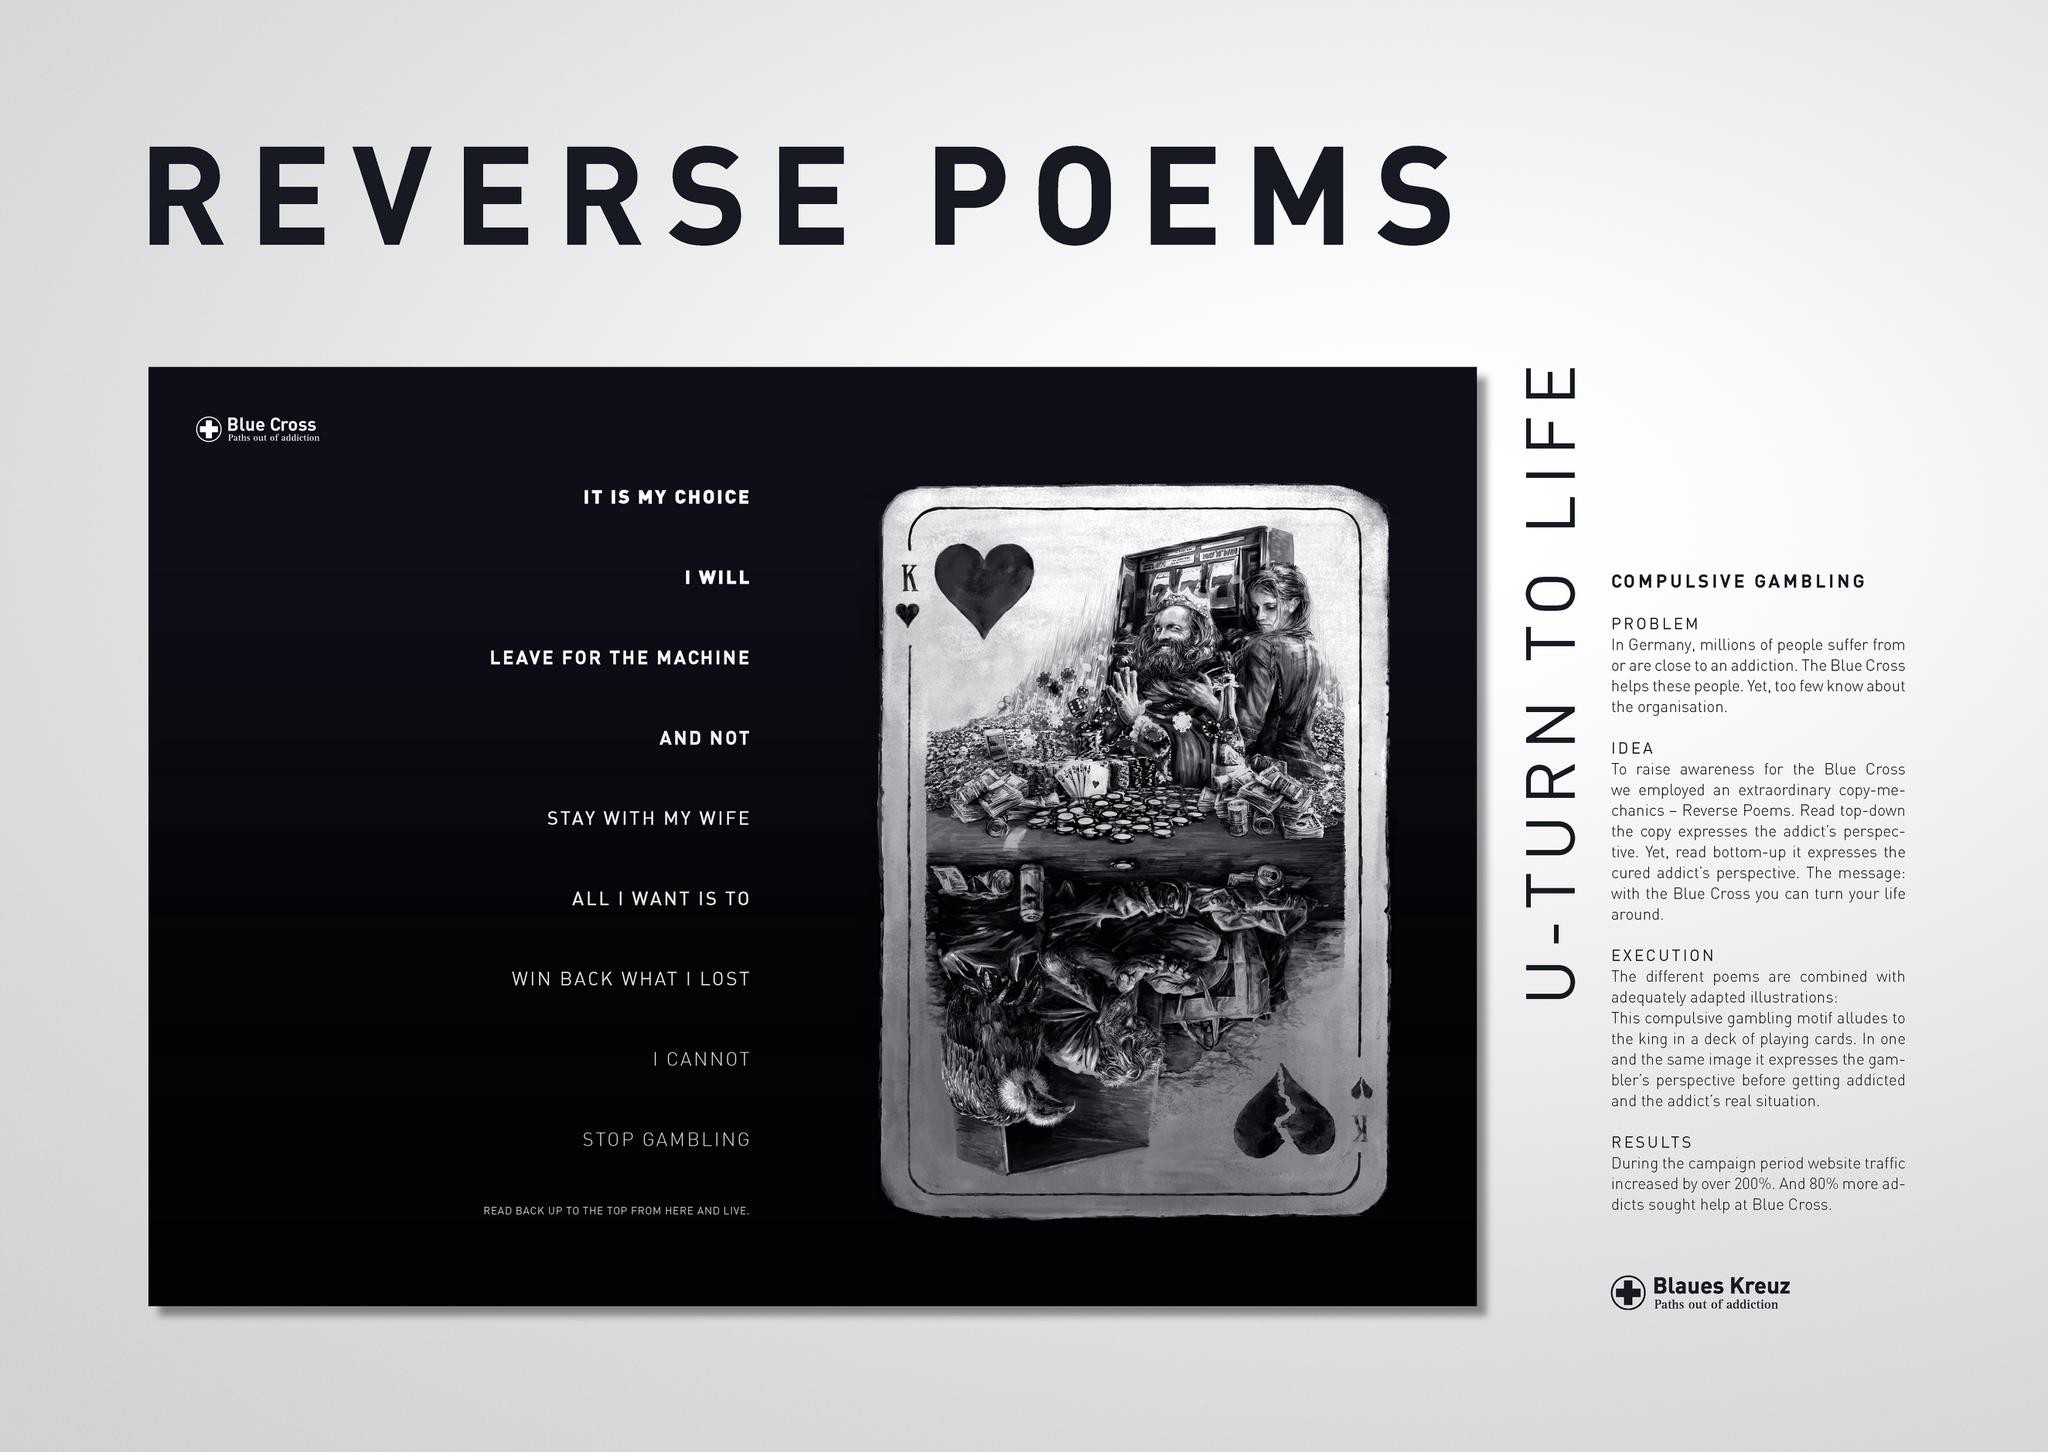 Reverse Poems: Compulsive Gambling